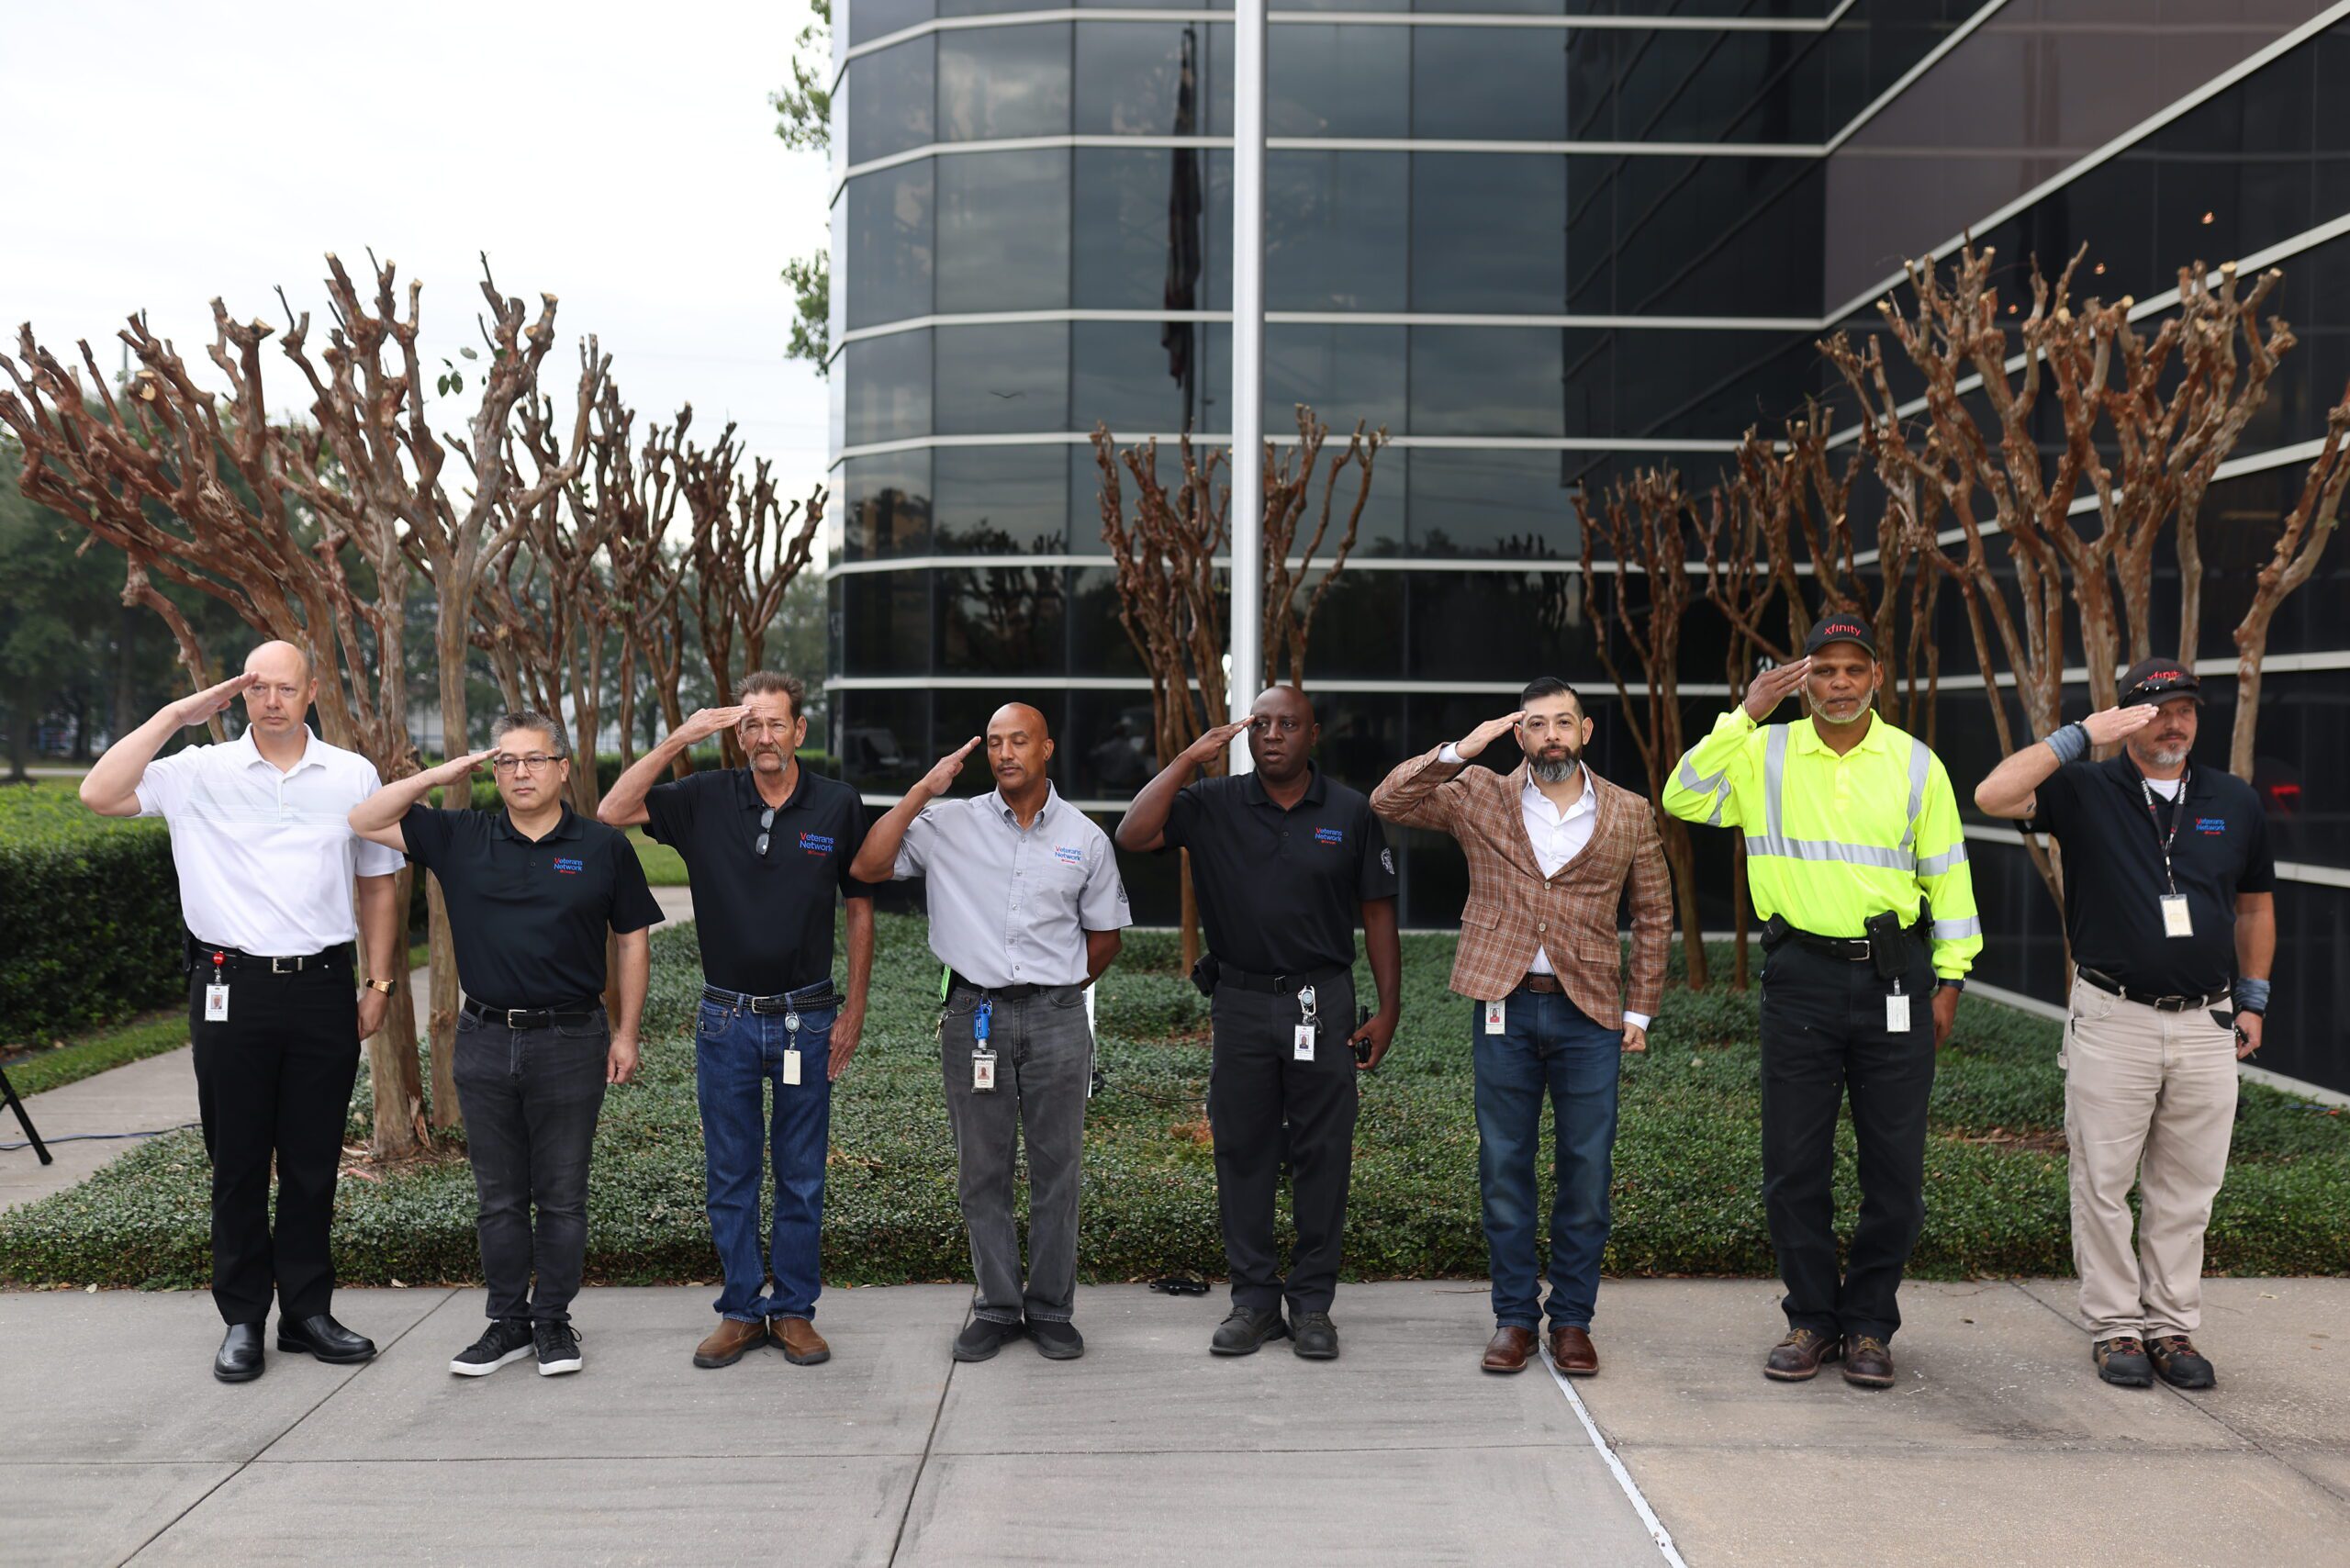 Eight members of Comcast's Veteran's Network saluting.